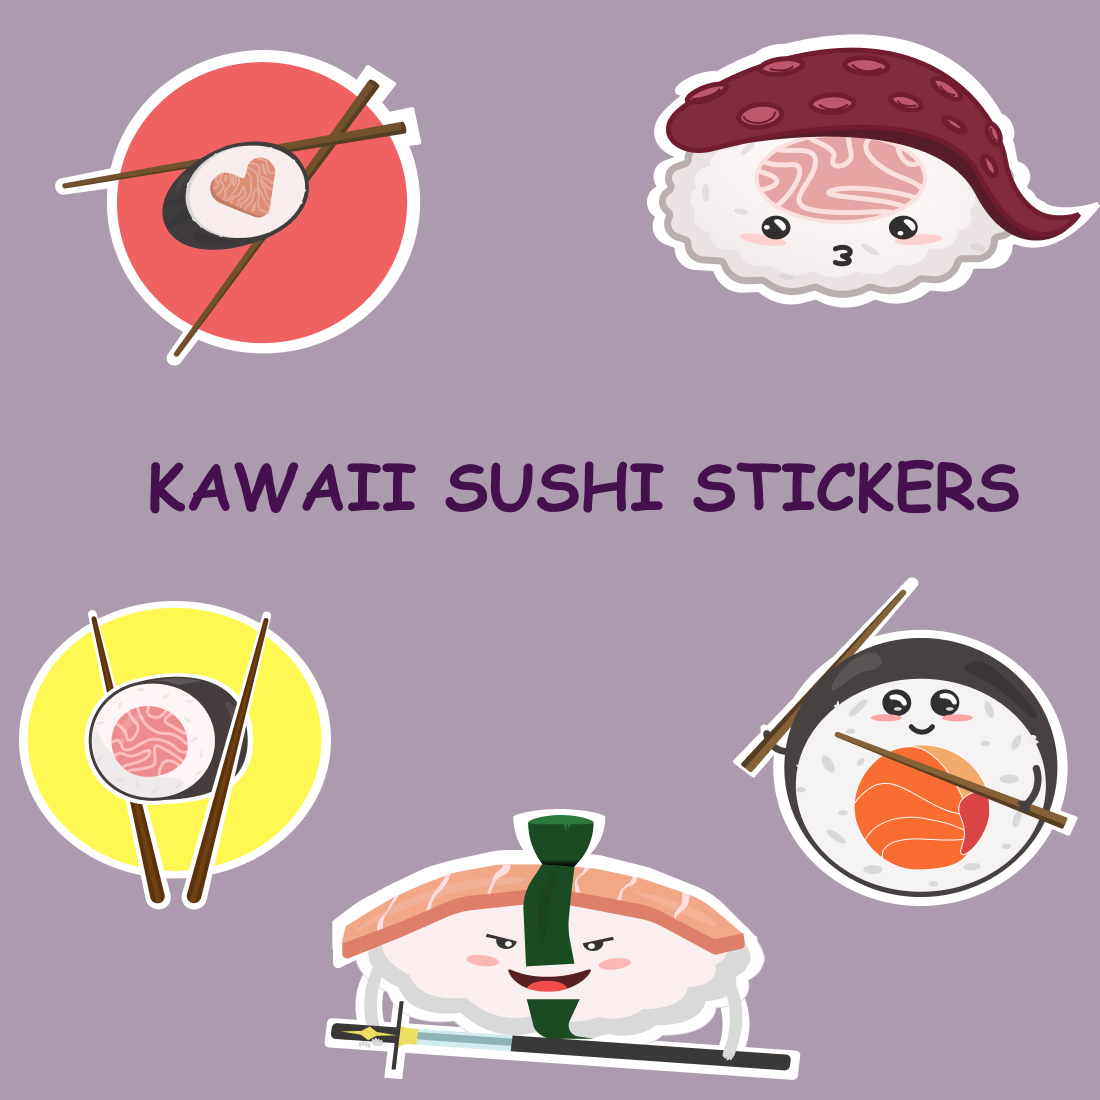 Kawaii Sushi Stickers cover image.